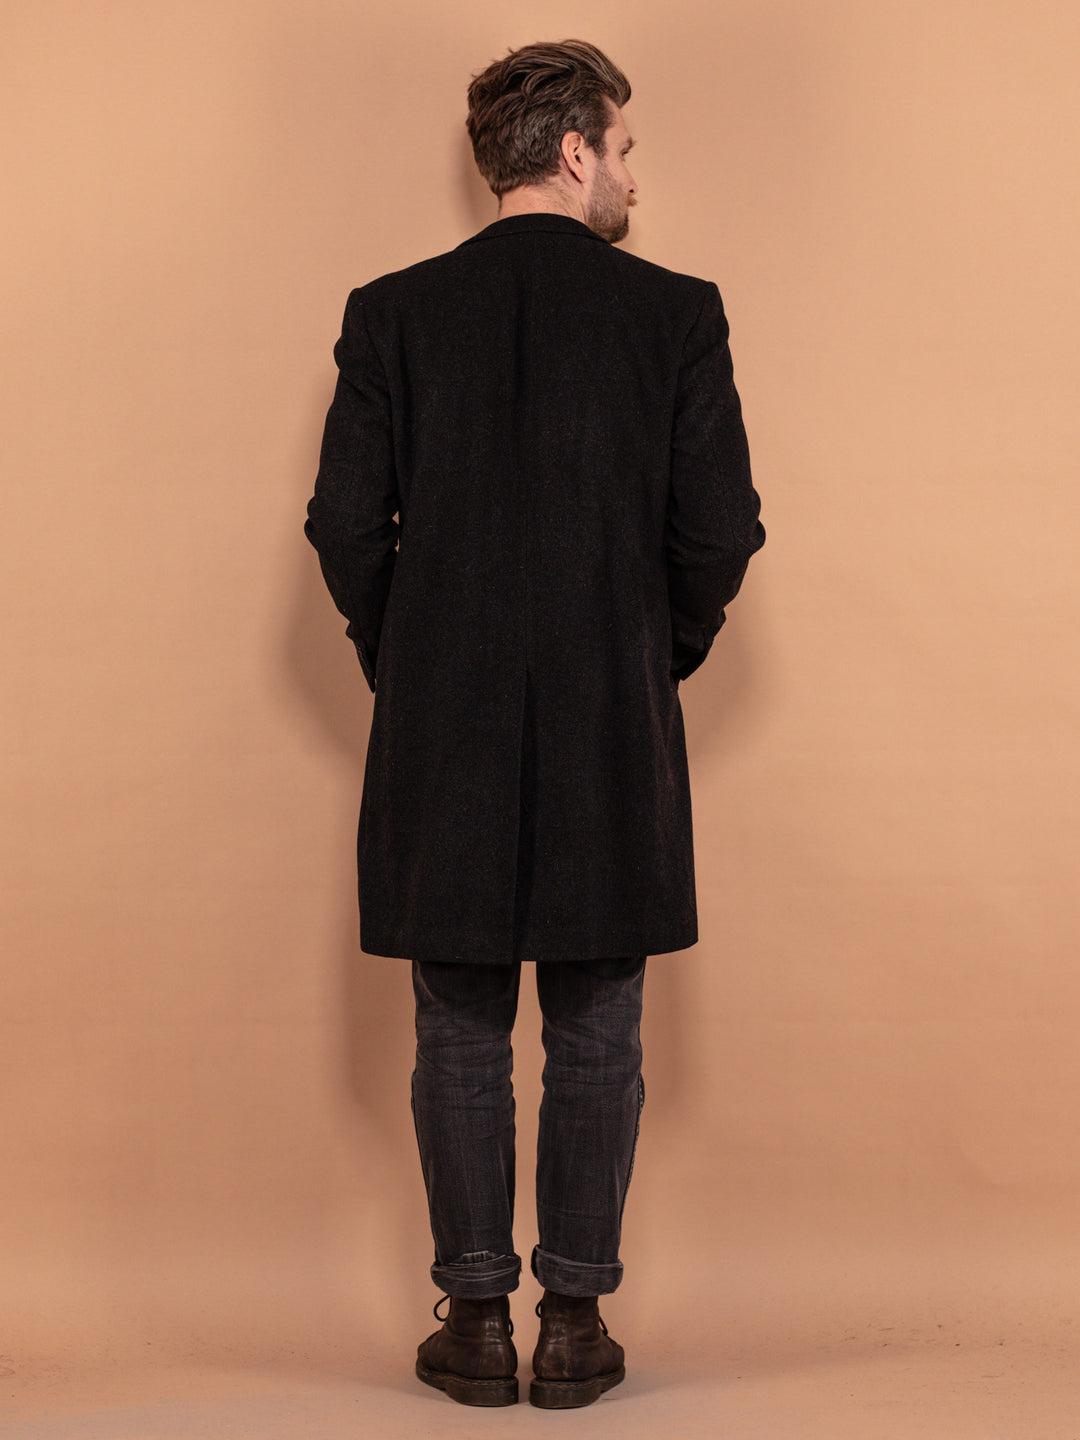 Black Wool Blend Coat 90's, Size M Medium, Vintage Lightweight Wool Topcoat, Classic Menswear, Elegant Outerwear, Minimalist Overcoat